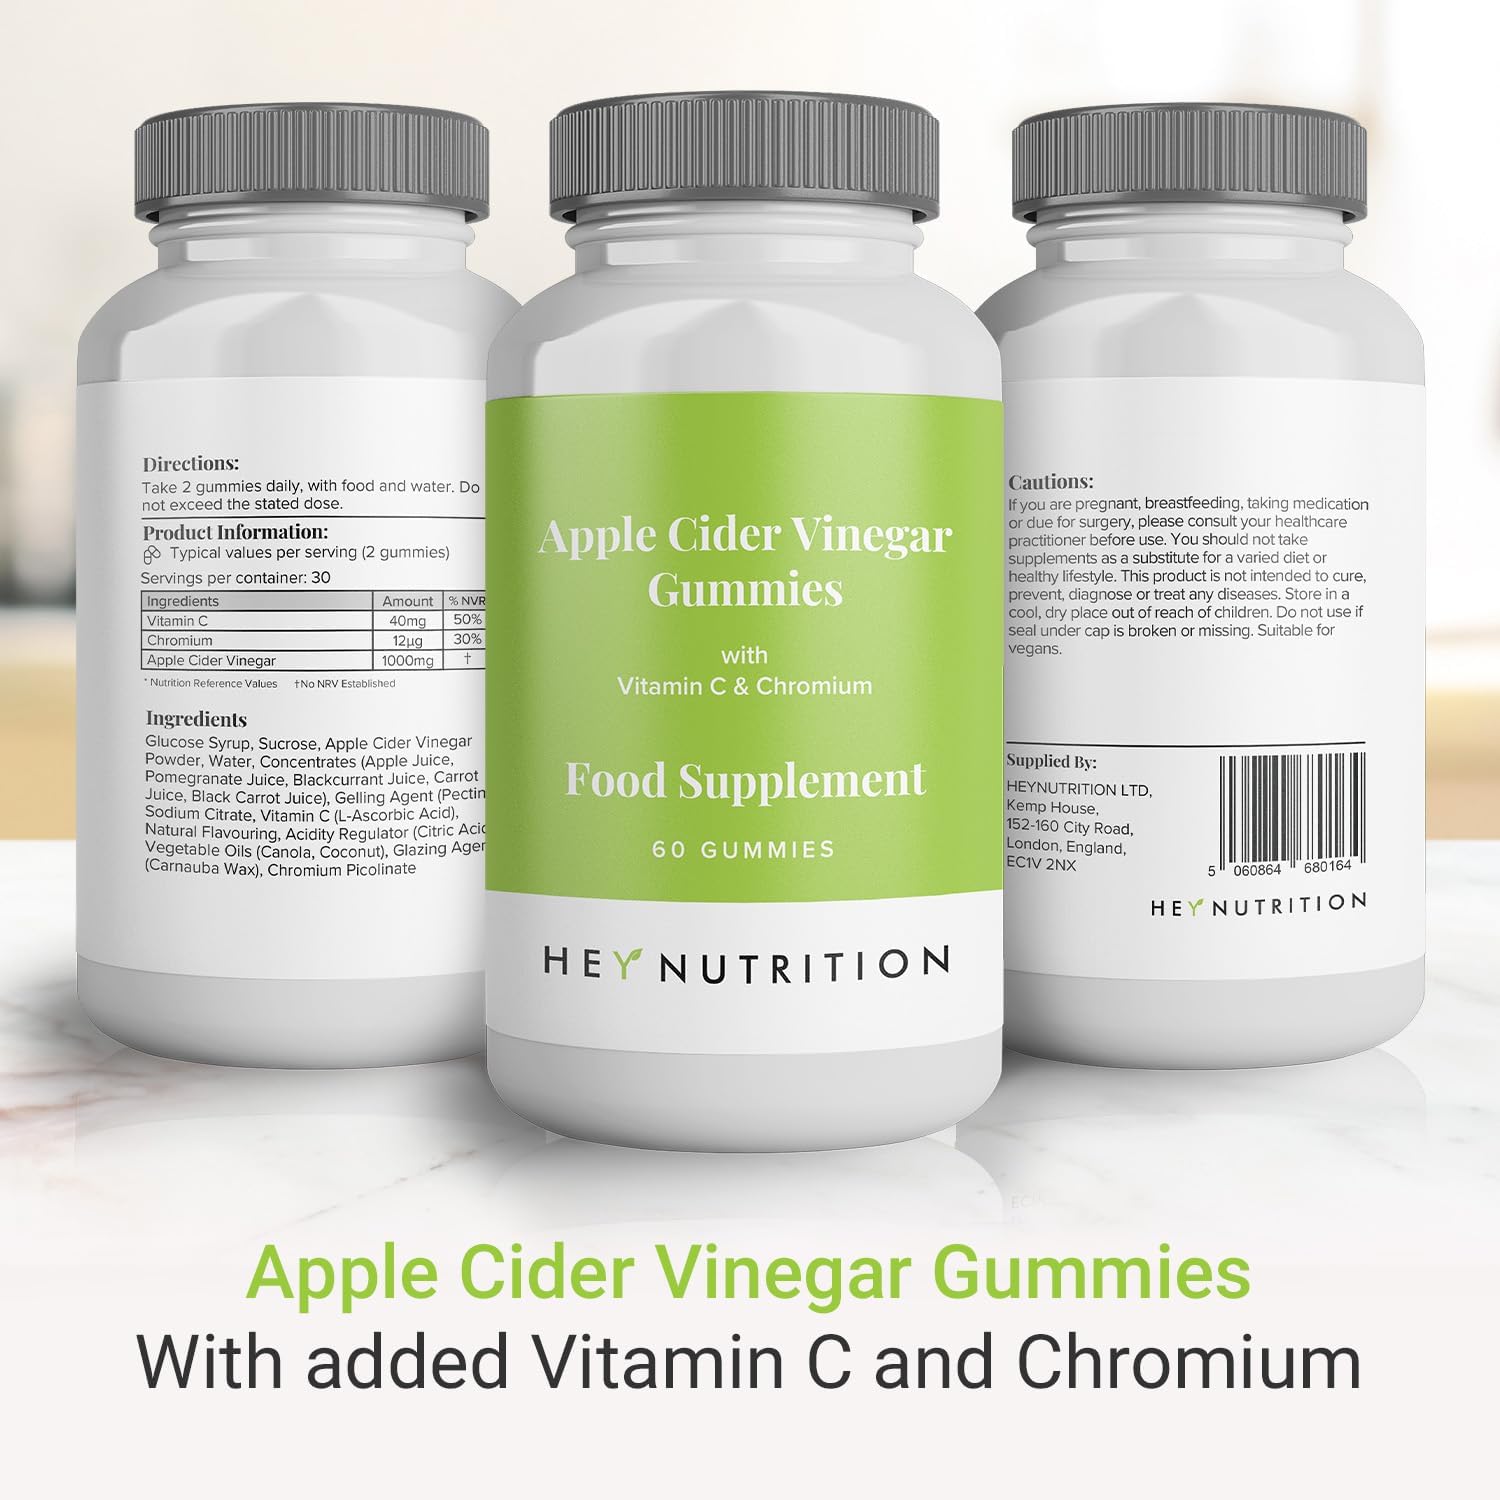 Hey Nutrition Apple Cider Vinegar Gummies